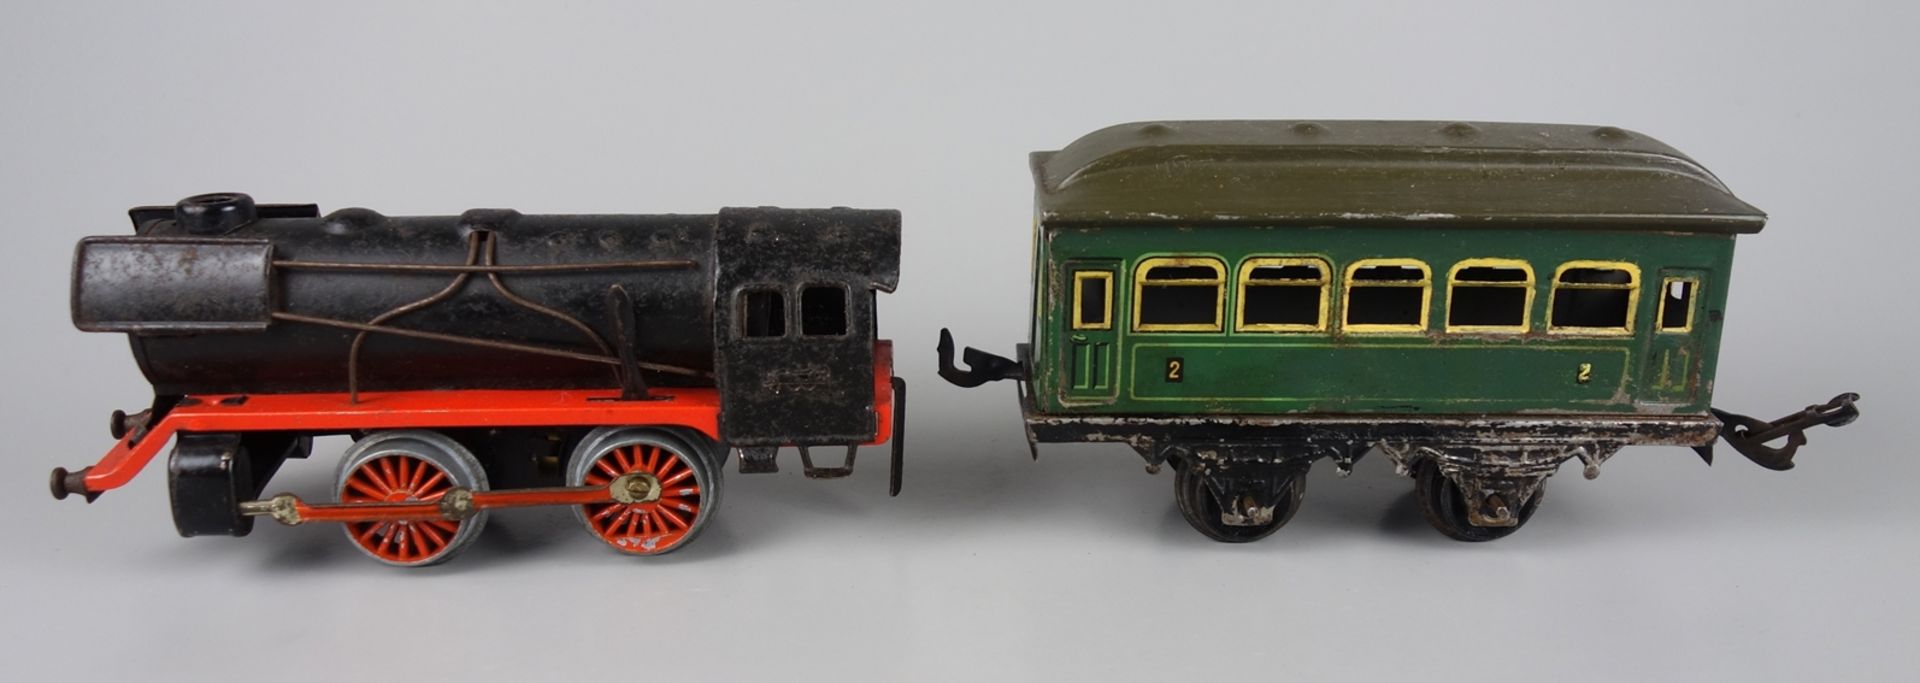 Steam locomotive and passenger car, 1* Bing, gauge 0 - Image 2 of 3